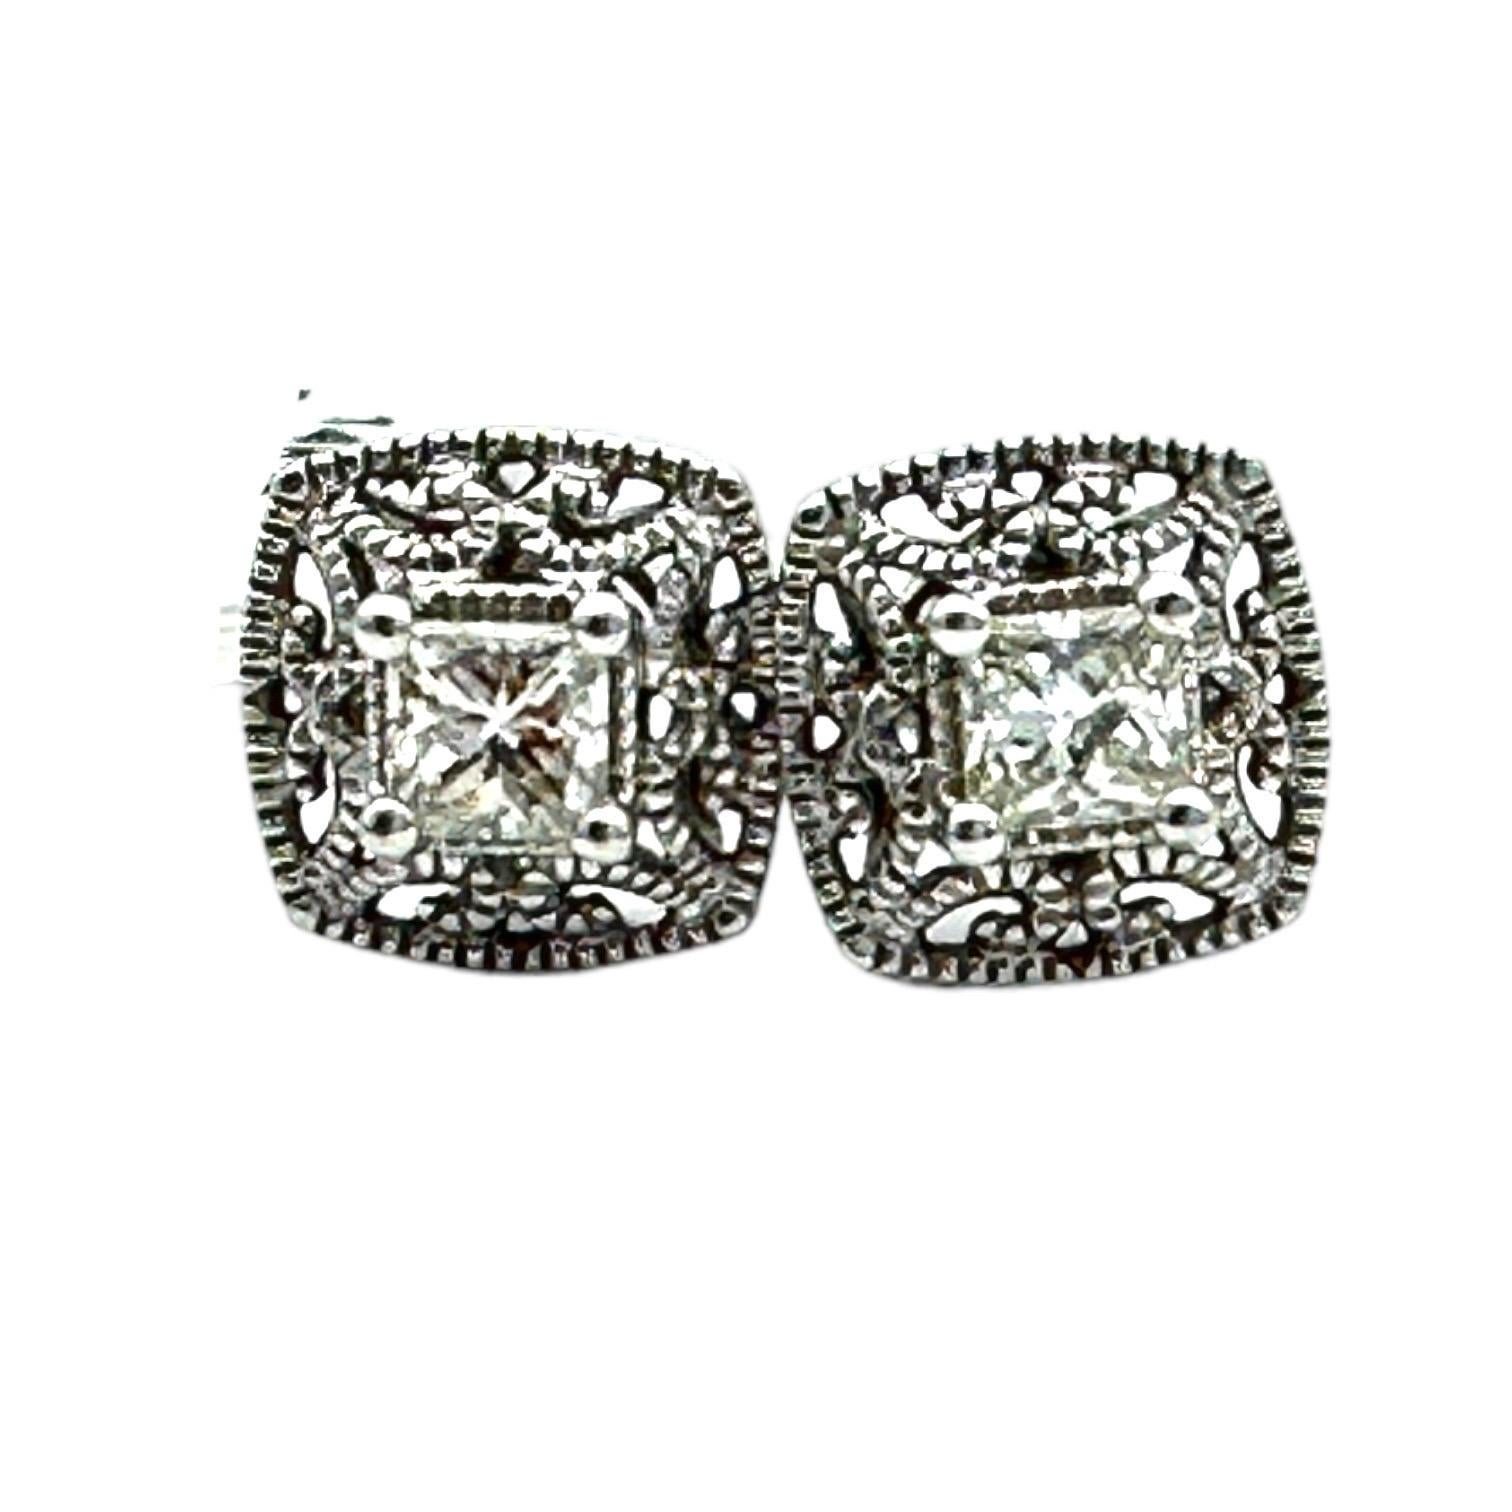 .35 carat diamond earrings